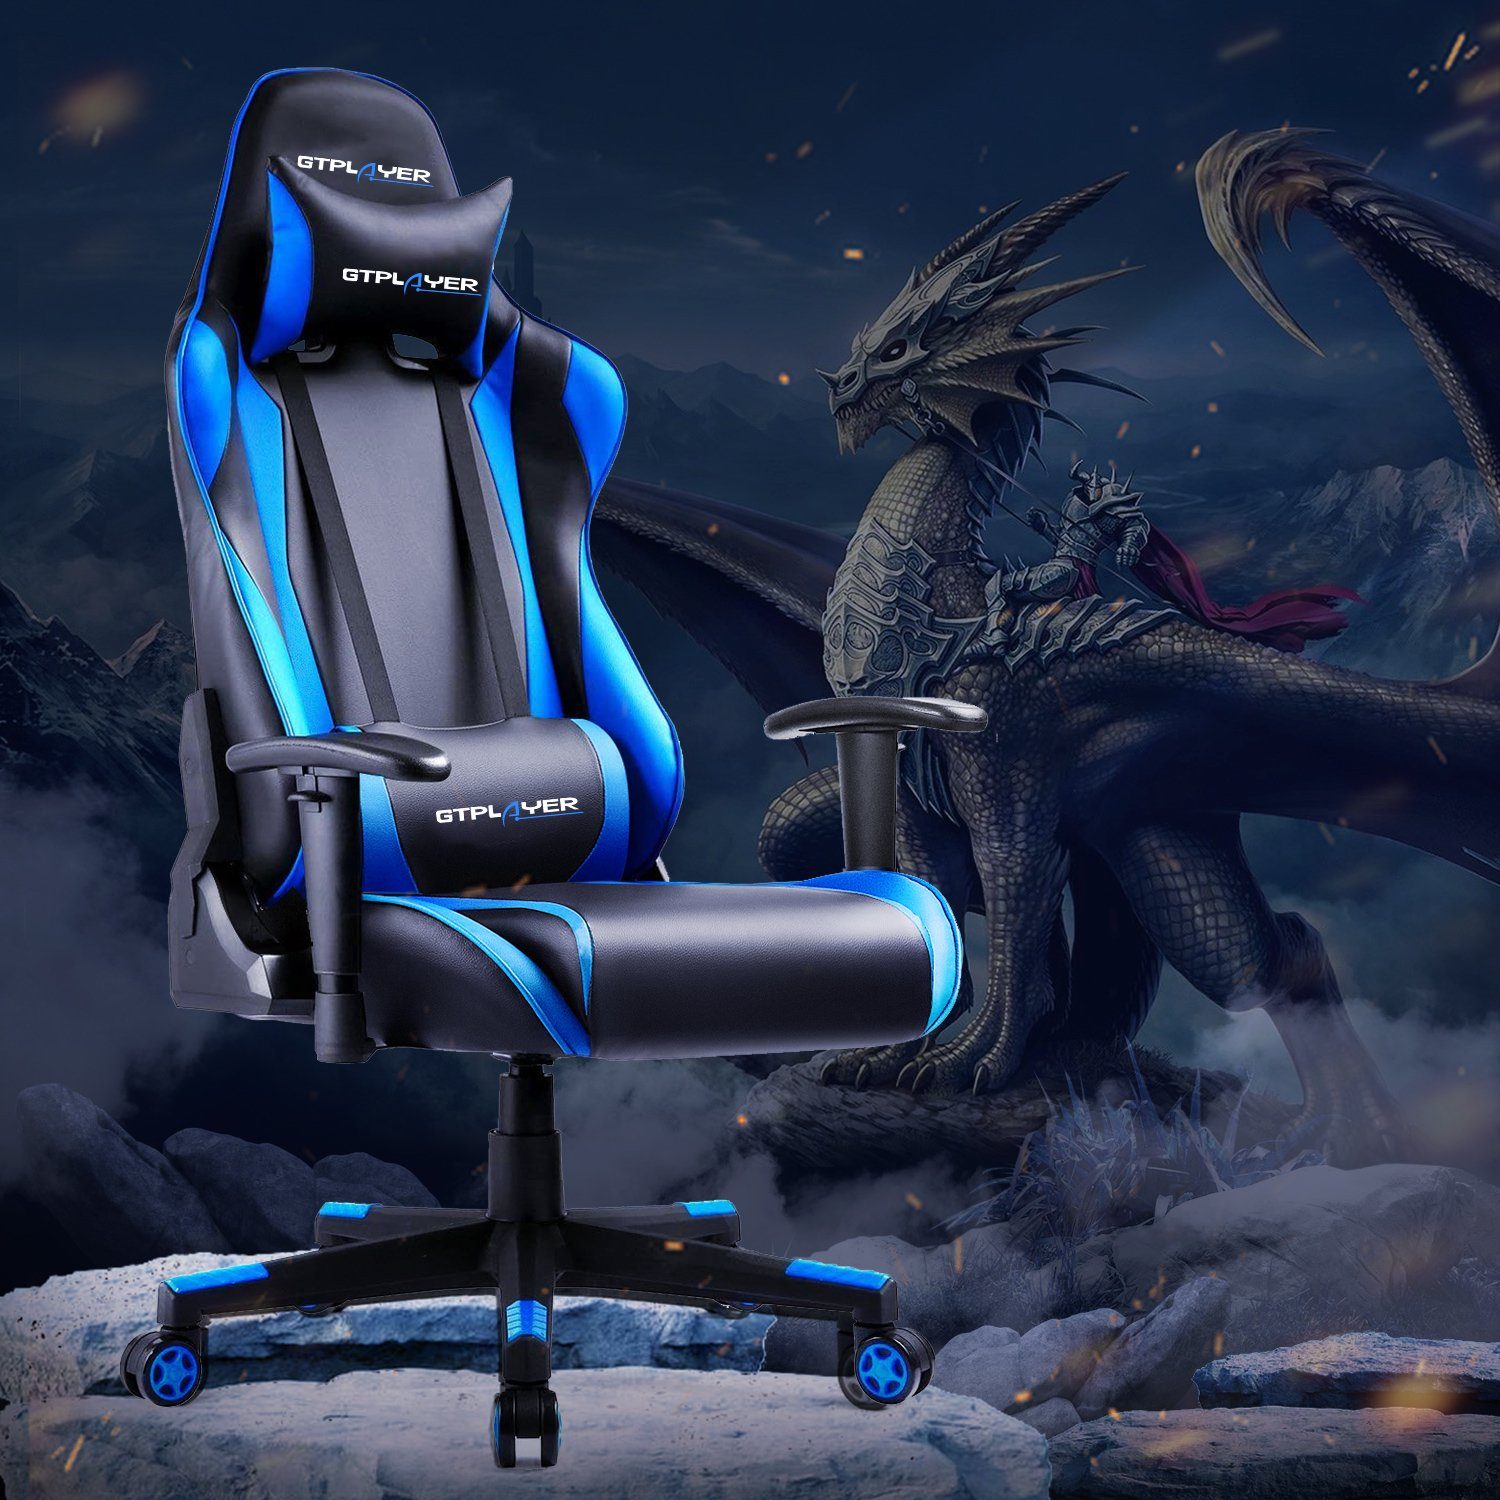 GTPLAYER Gaming-Stuhl Bürostuhl Gaming Stuhl Gaming Sessel ergonomischer  Gamer Stuhl, bis 150 kg belastbar, mit verstellbare Lendenkissen,  Kopfkissen, Armlehnen, Neigungswinkel 90°-165°